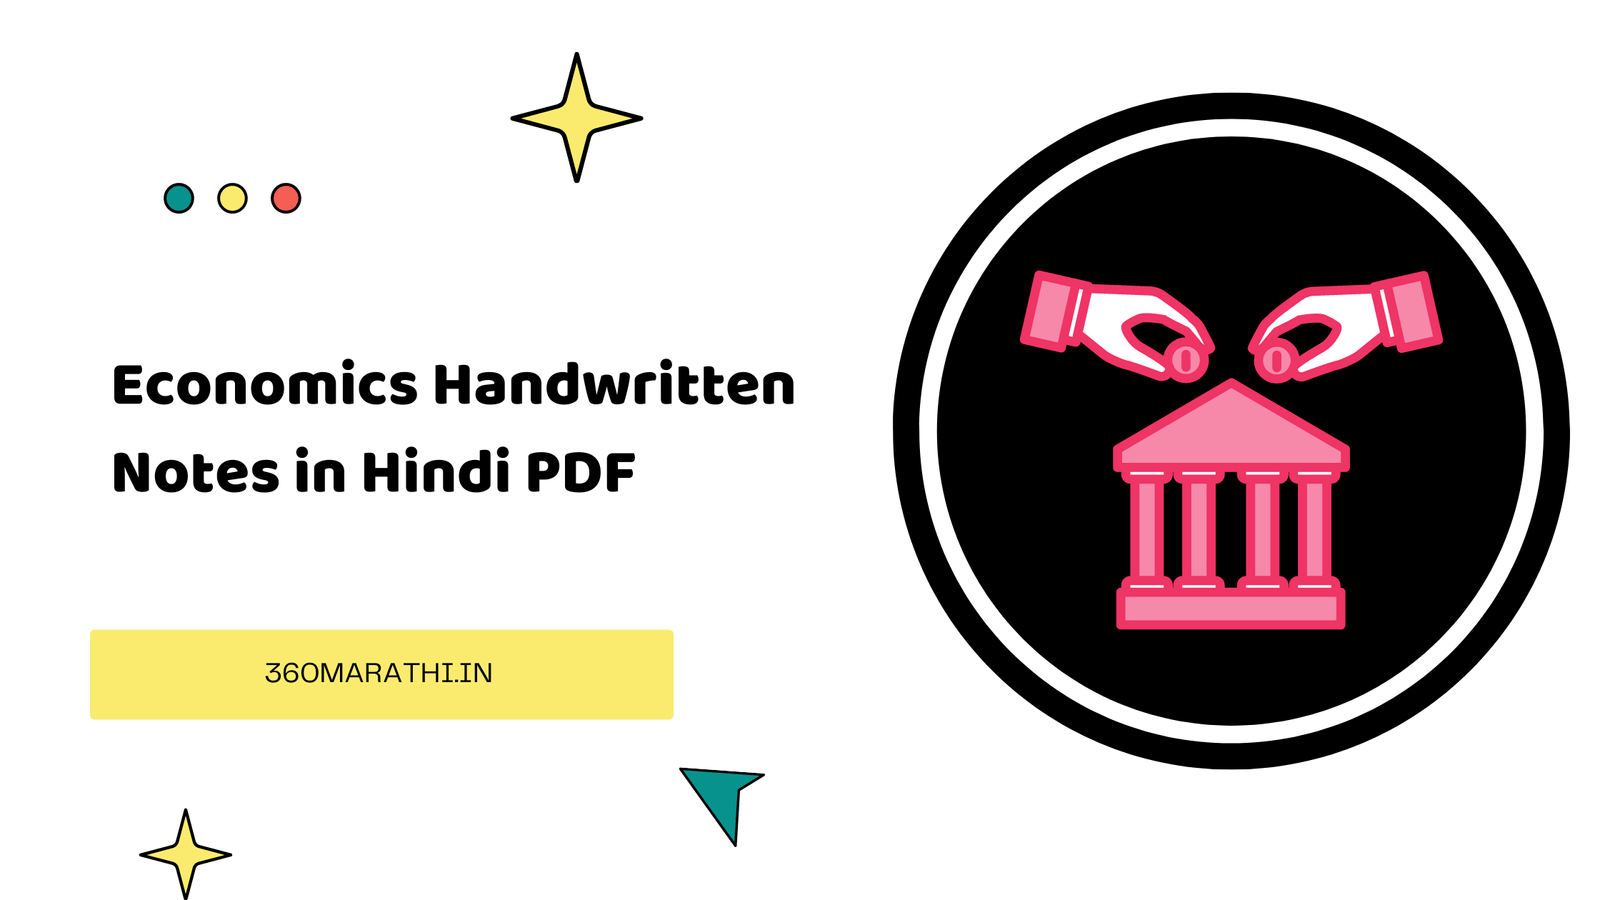 Economics Handwritten Notes in Hindi PDF